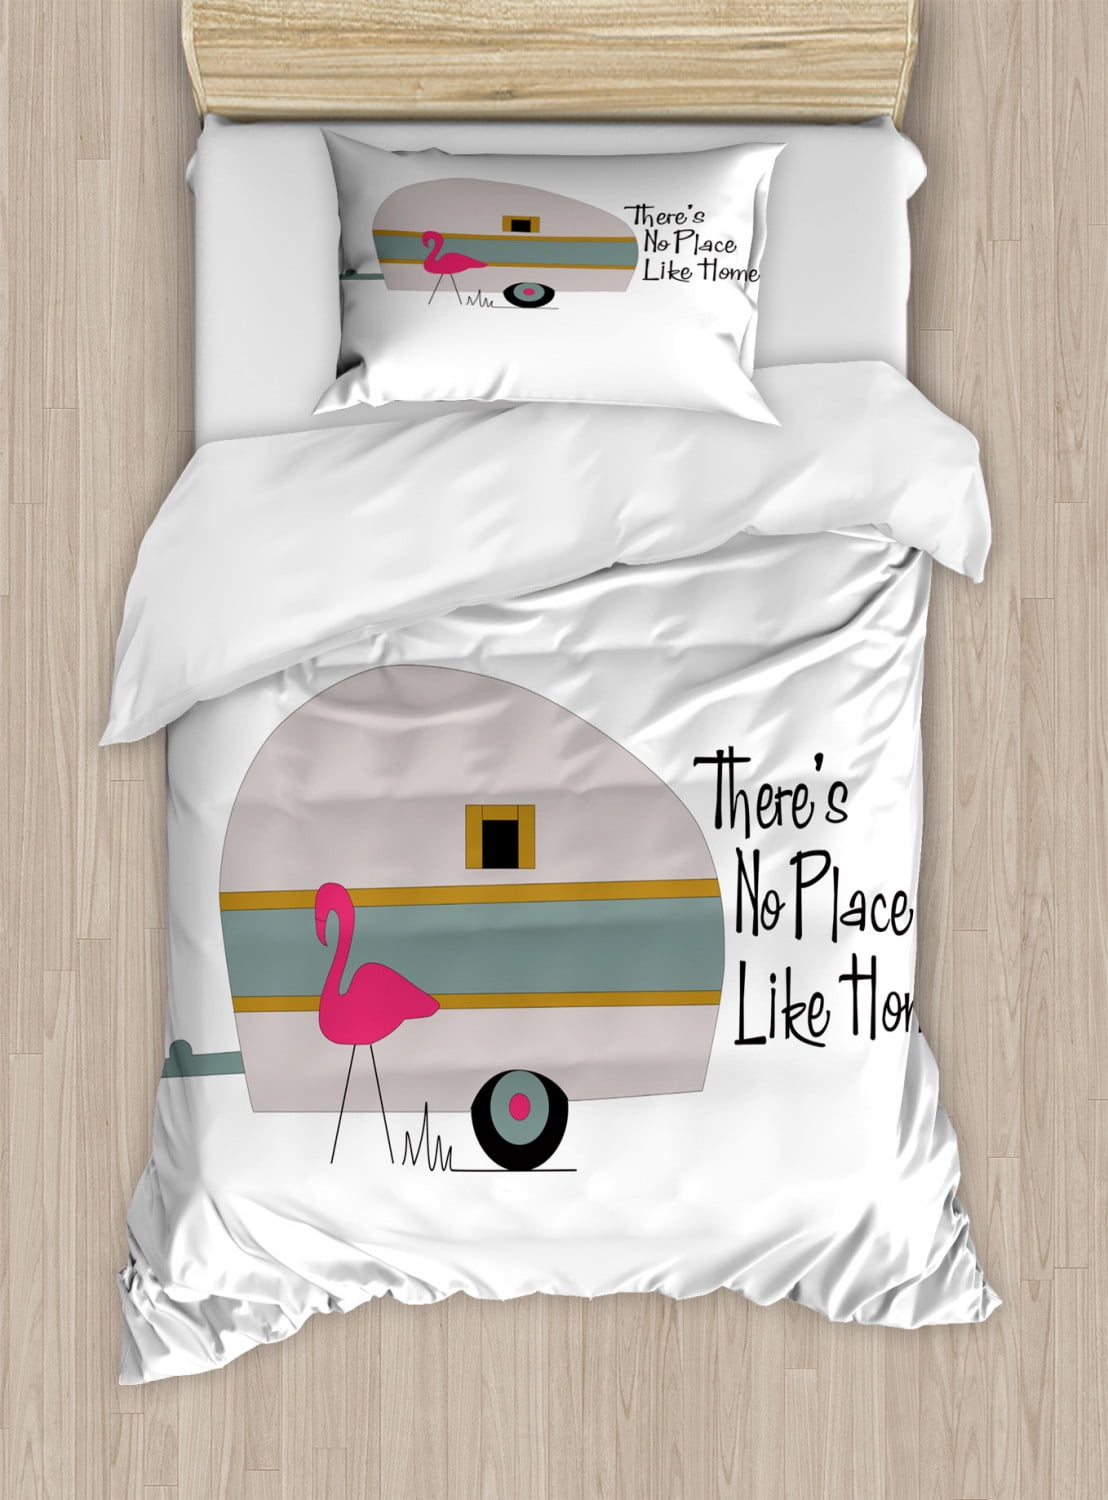 Sunset Luxury Cotton Bedding Set:1 Duvet Cover & 2 Pillow Shams Queen/King/Cal K 